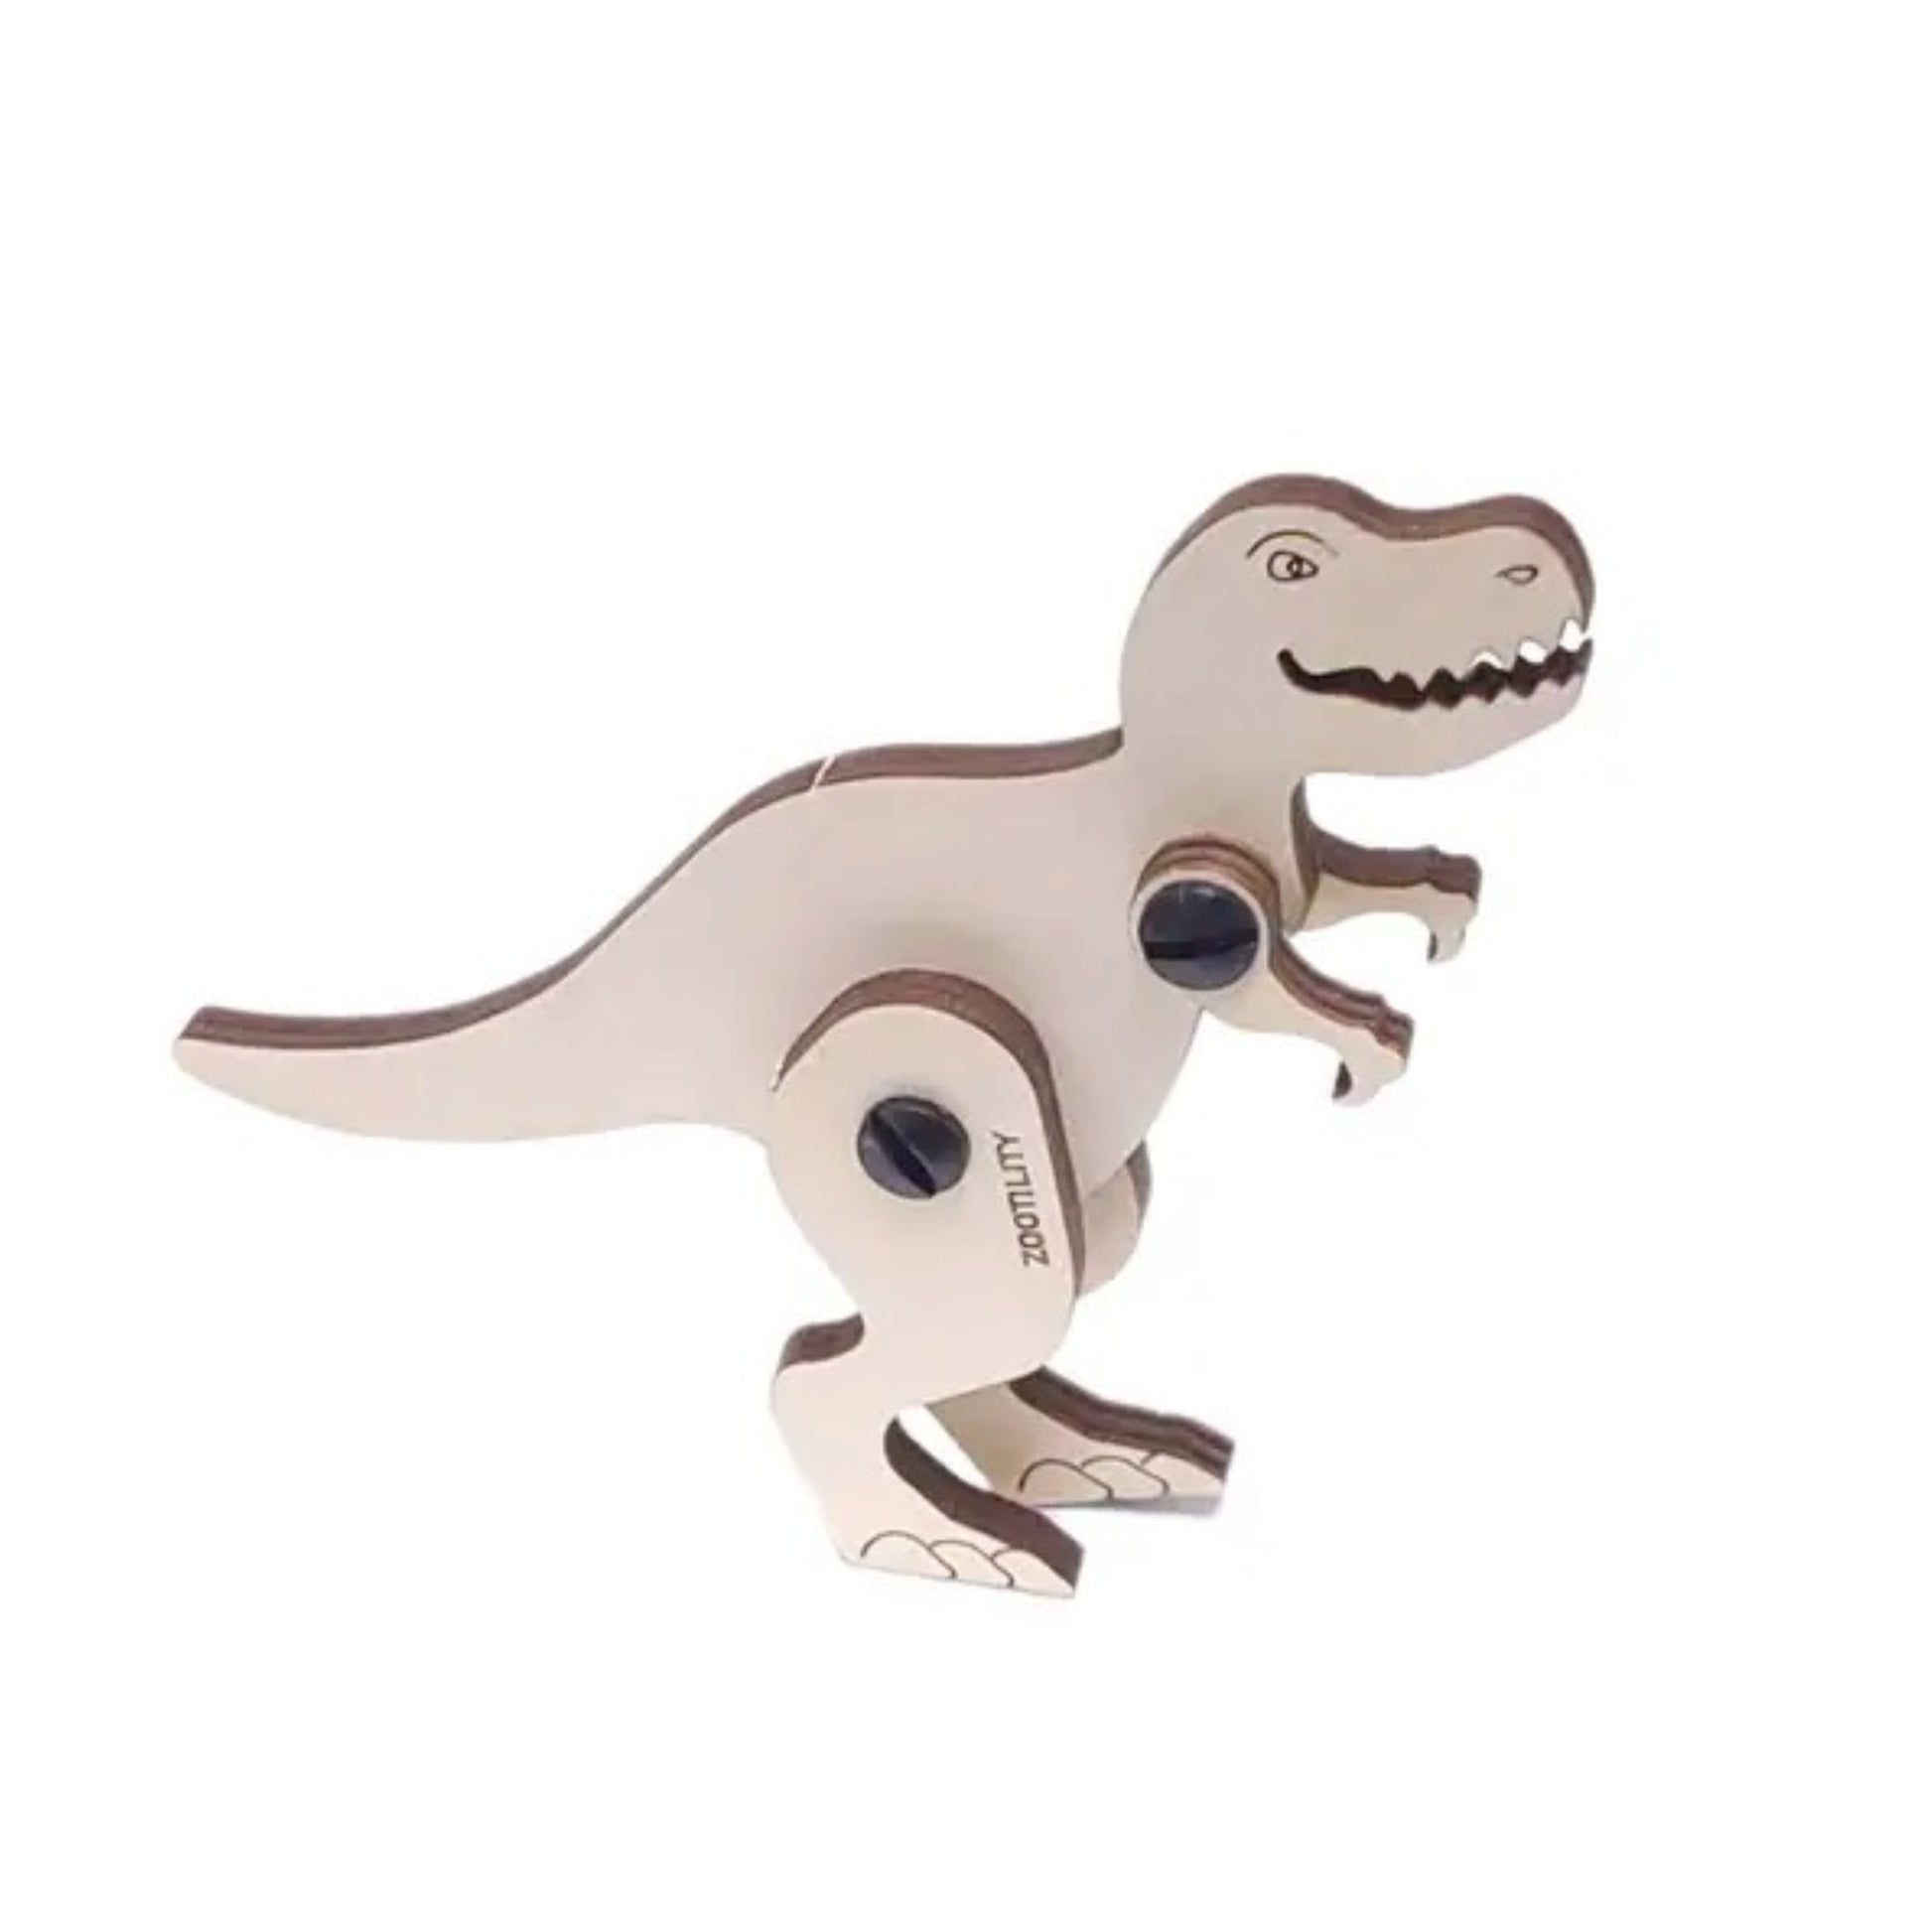 Puzzle 3D - Dinossauro T-Rex